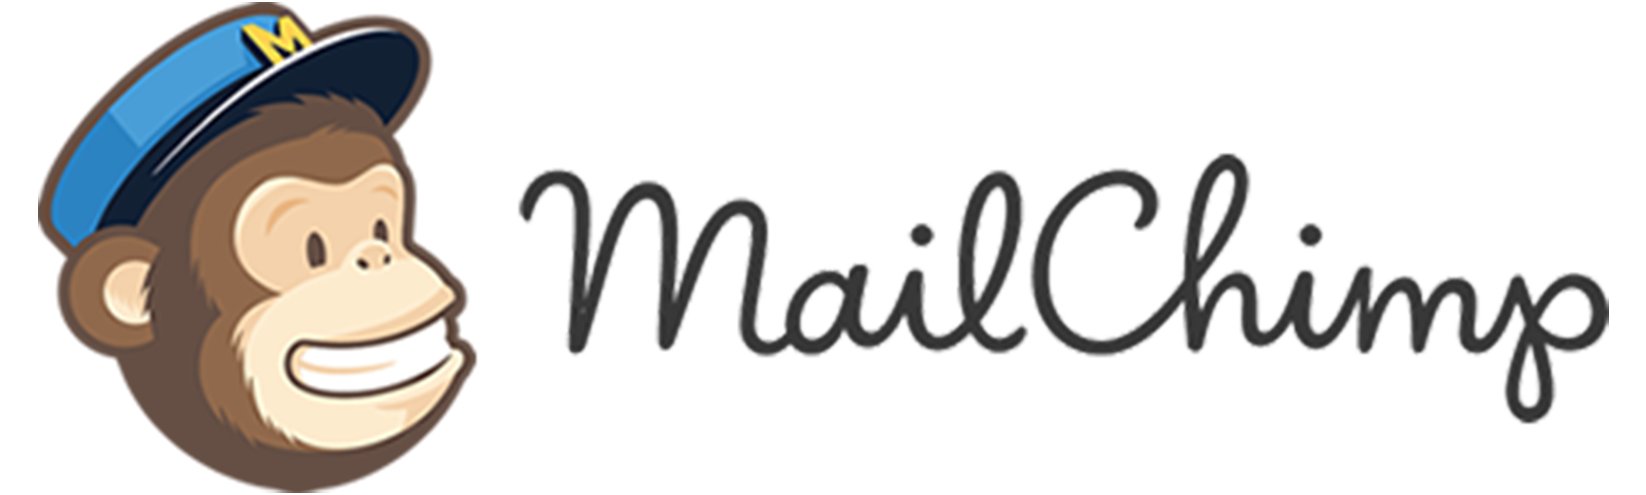 Business Emails Templates - Mailchimp Vector, Transparent background PNG HD thumbnail